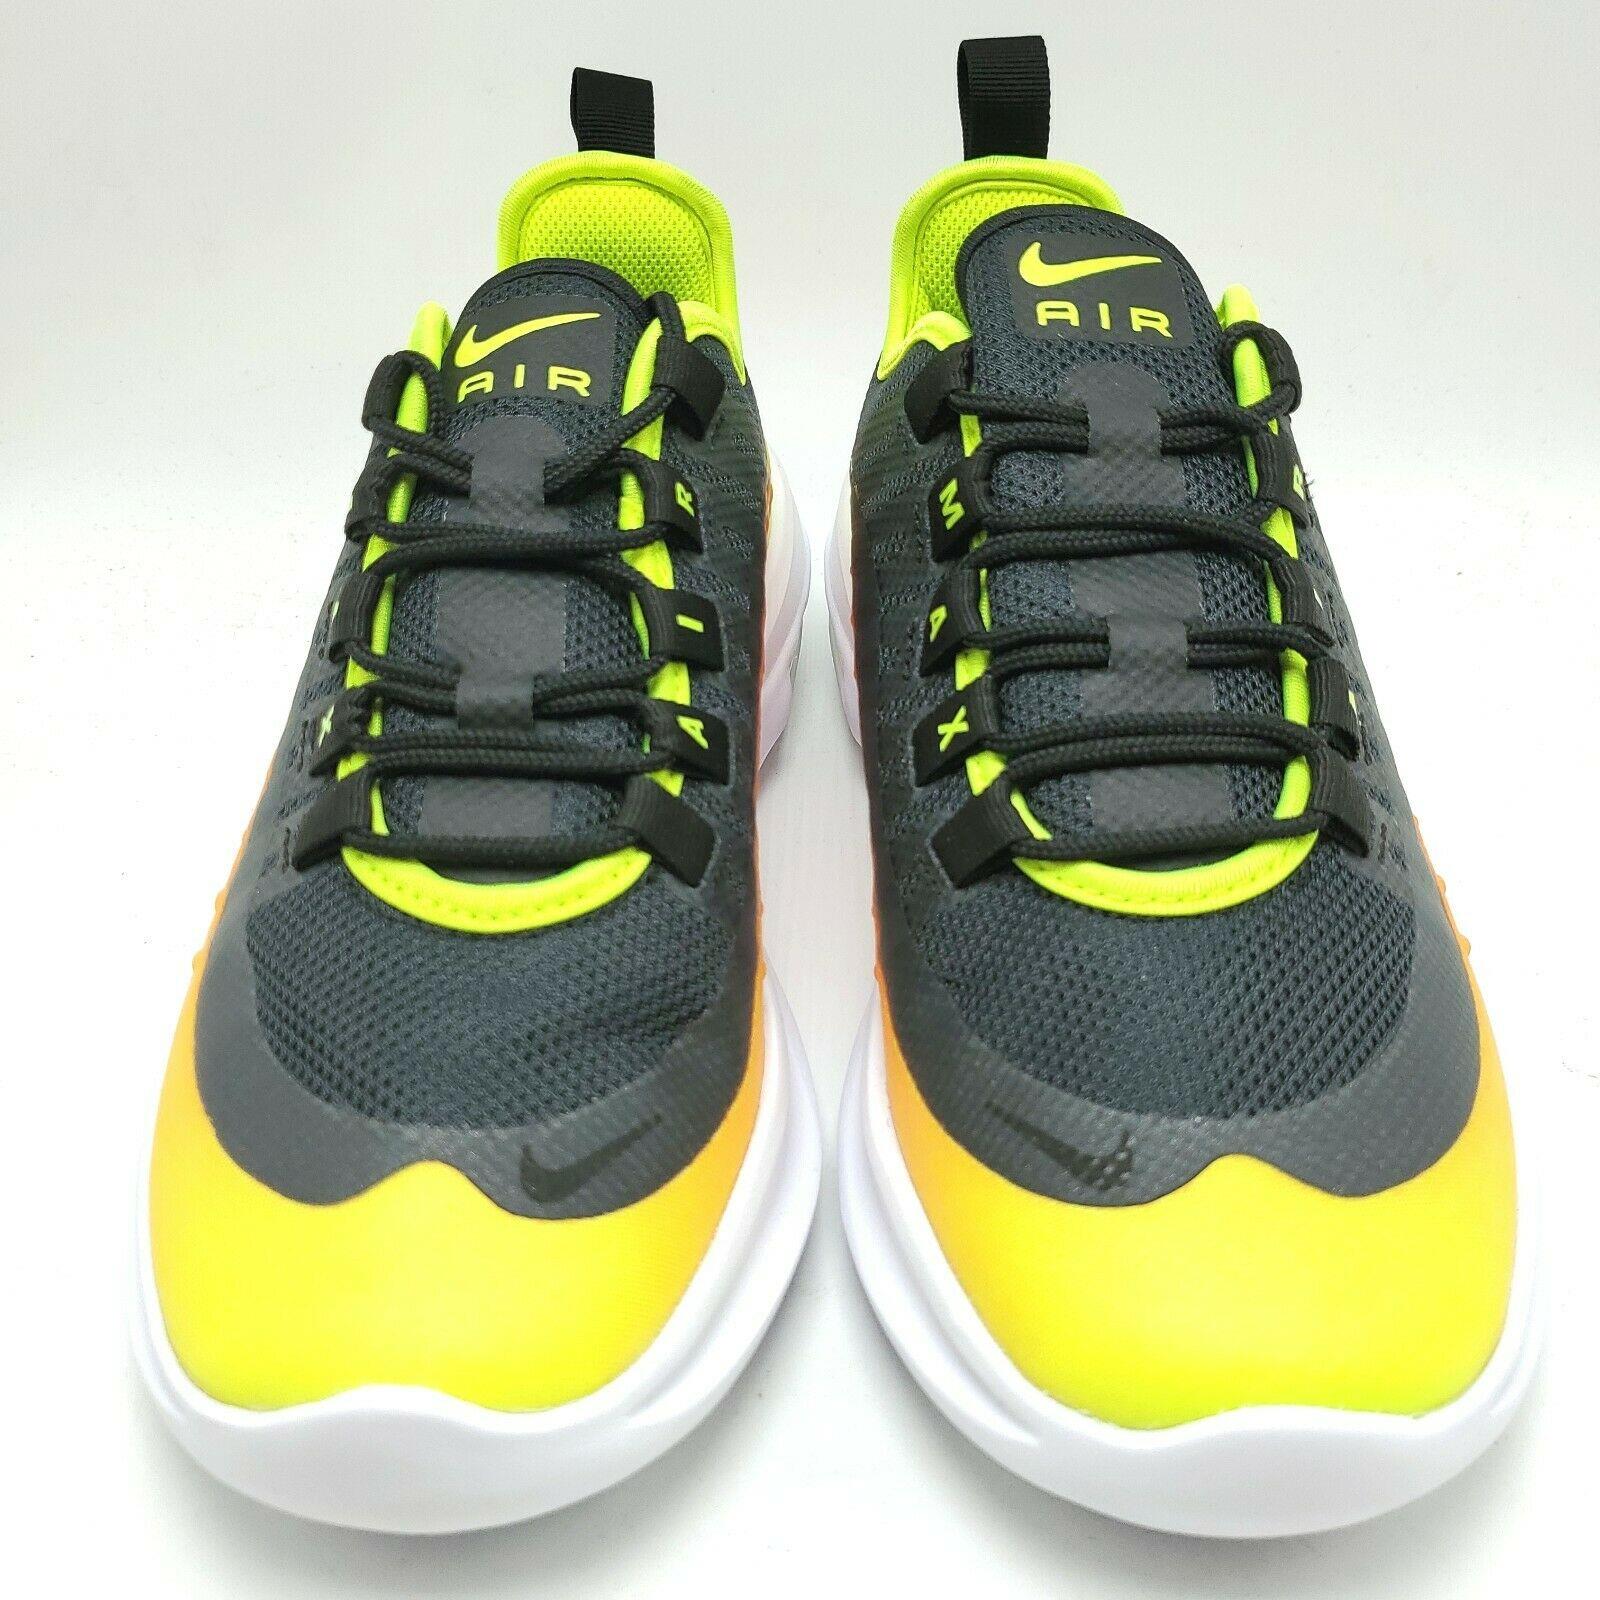 Nike Air Max Axis RF GS Youth Running Shoes Black/volt-total Orange  AV7590-001 صور خزف